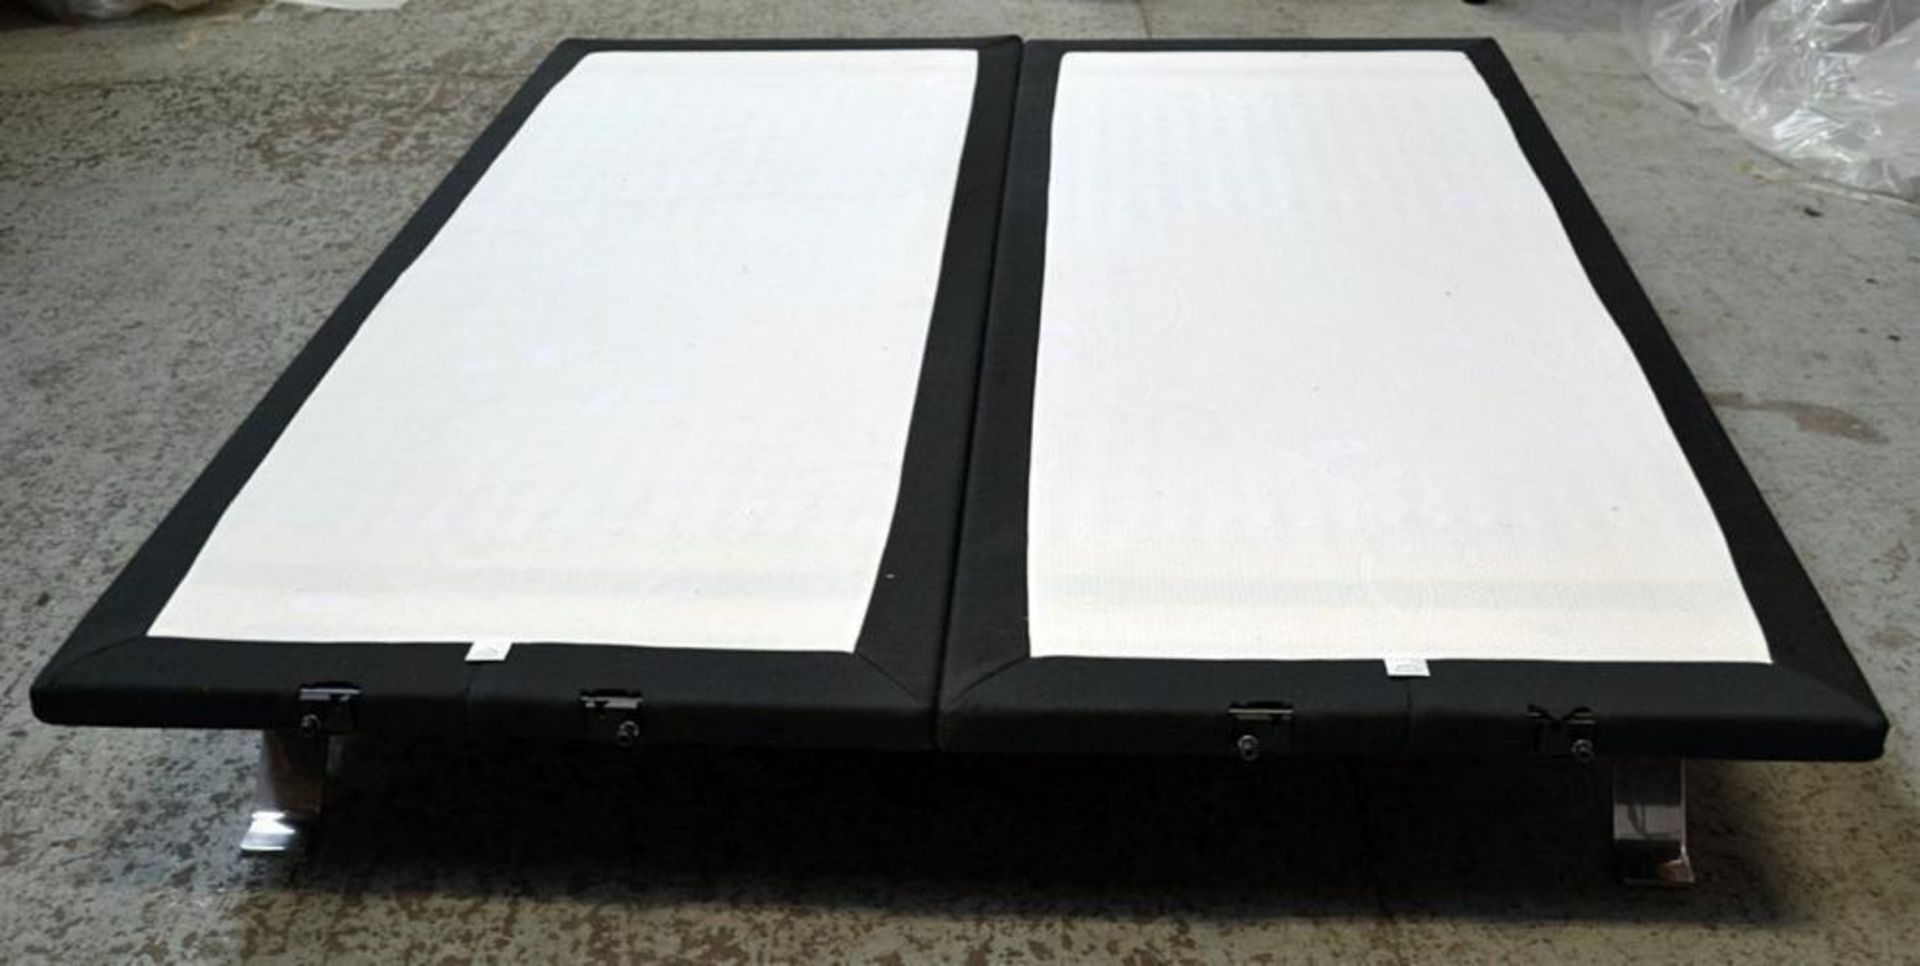 1 x Jensen EDEN Adjustable Superking Bed Base - W180 x L210 x H34cm - Colour: Black - CL087 - Ref: - Image 11 of 13